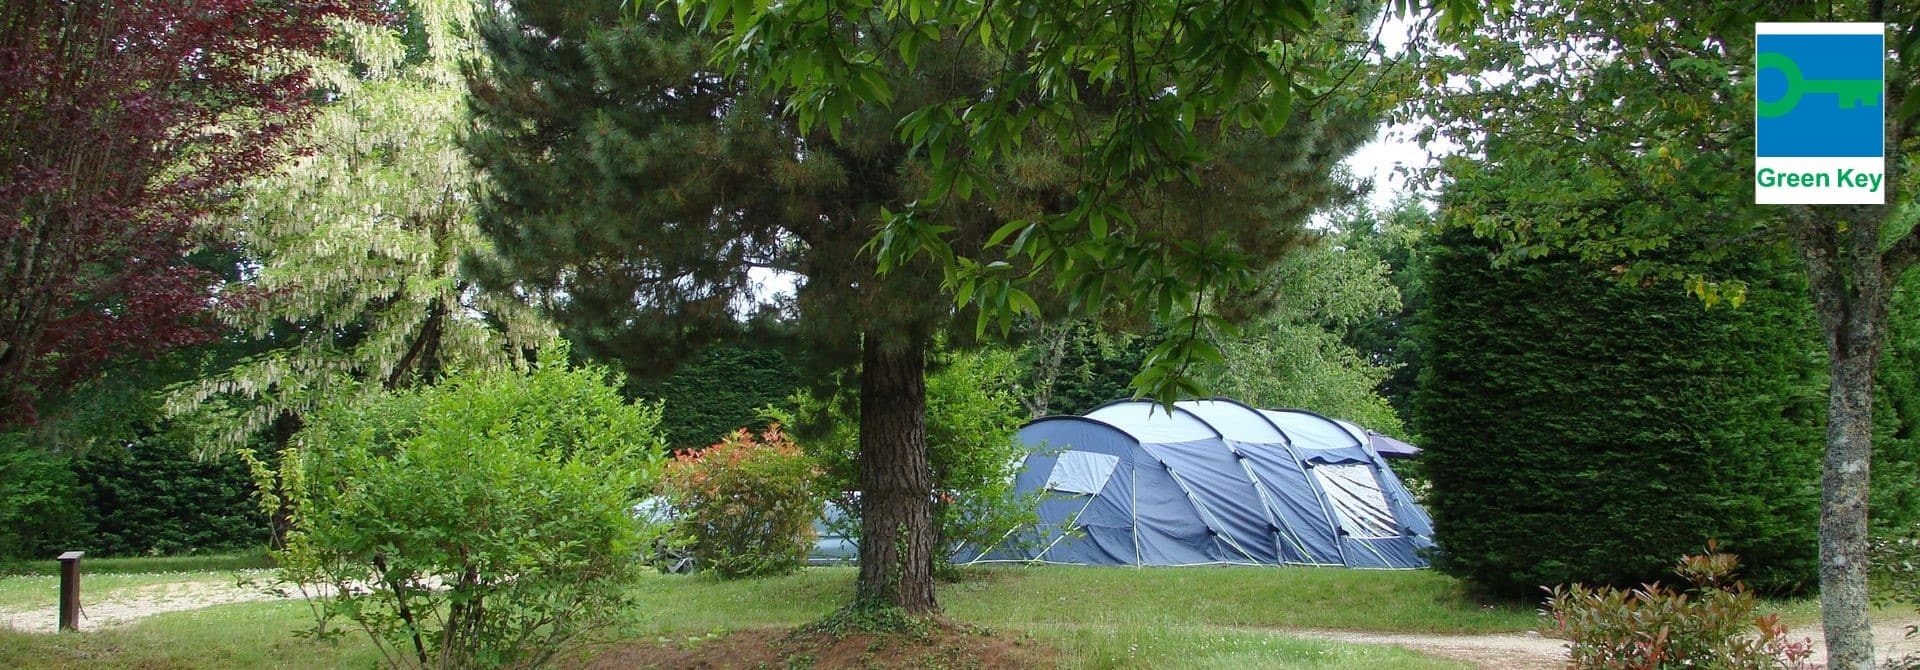 Kleine camping in Zuid Frankrijk - Camping Le Rêve - Plaats